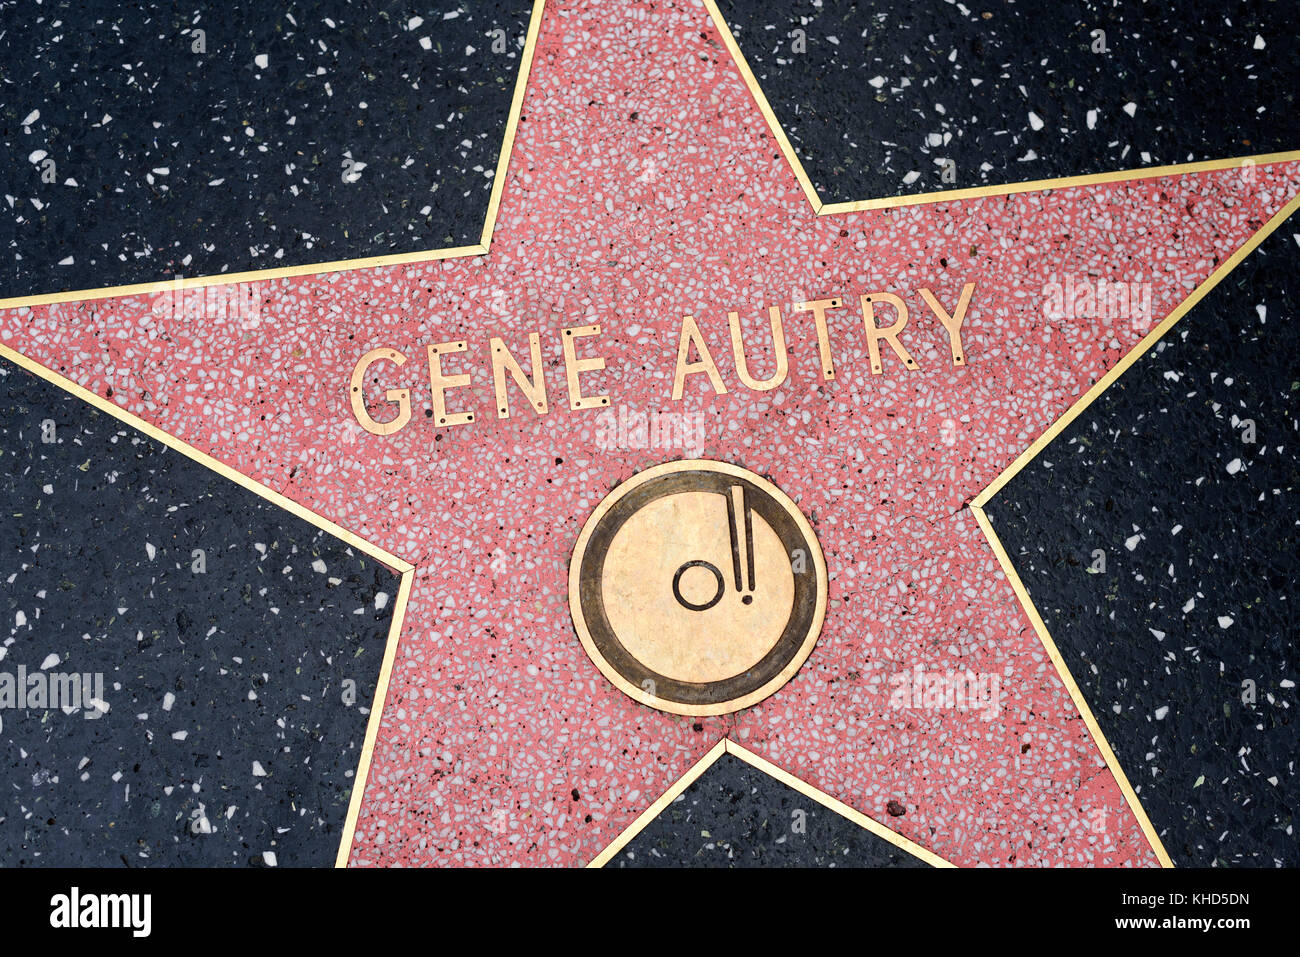 HOLLYWOOD, CA - DEZEMBER 06: Gene Autry Star auf dem Hollywood Walk of Fame in Hollywood, Kalifornien am 6. Dezember 2016. Stockfoto